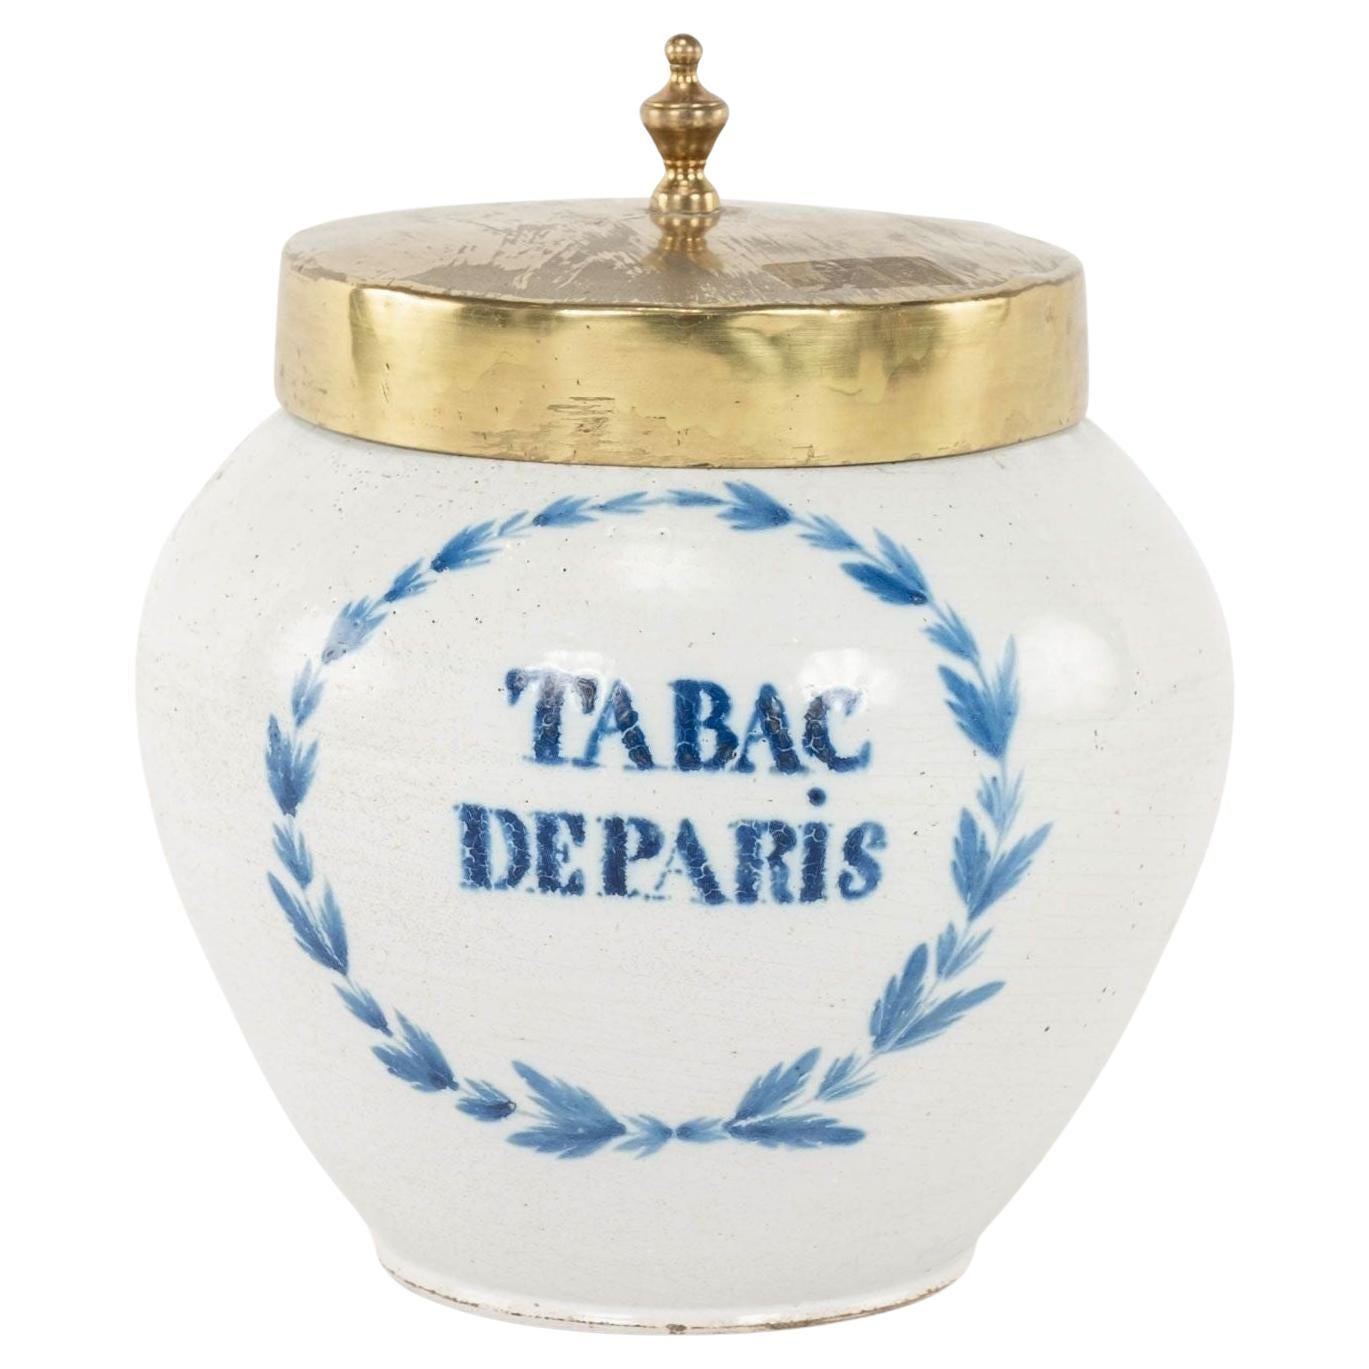 Tin-Glazed "Tabac deParis" Tobacco Jar